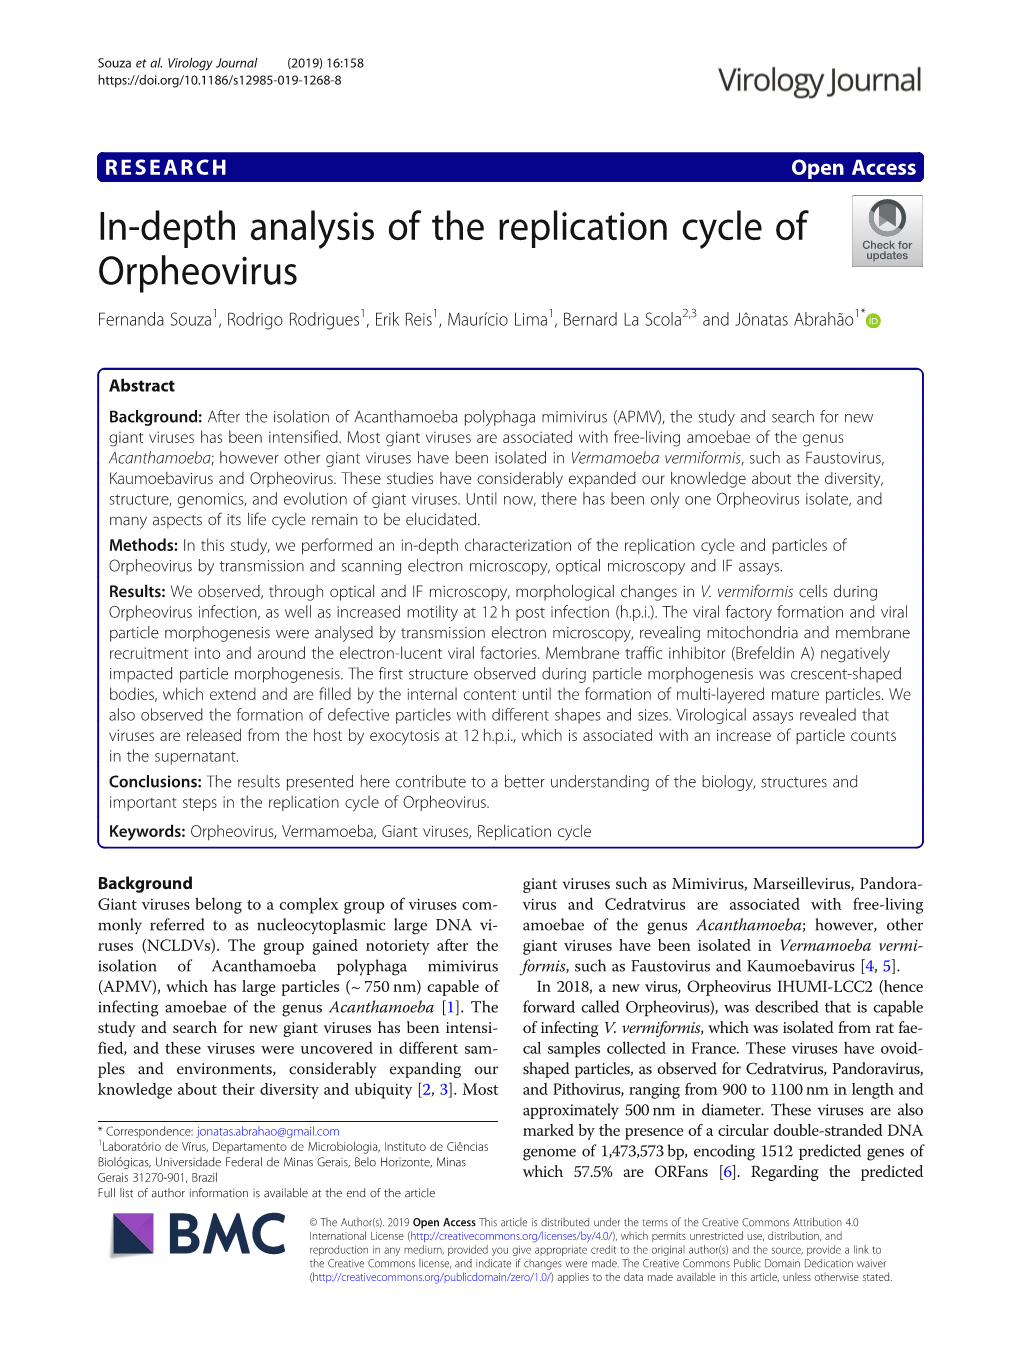 In-Depth Analysis of the Replication Cycle of Orpheovirus Fernanda Souza1, Rodrigo Rodrigues1, Erik Reis1, Maurício Lima1, Bernard La Scola2,3 and Jônatas Abrahão1*